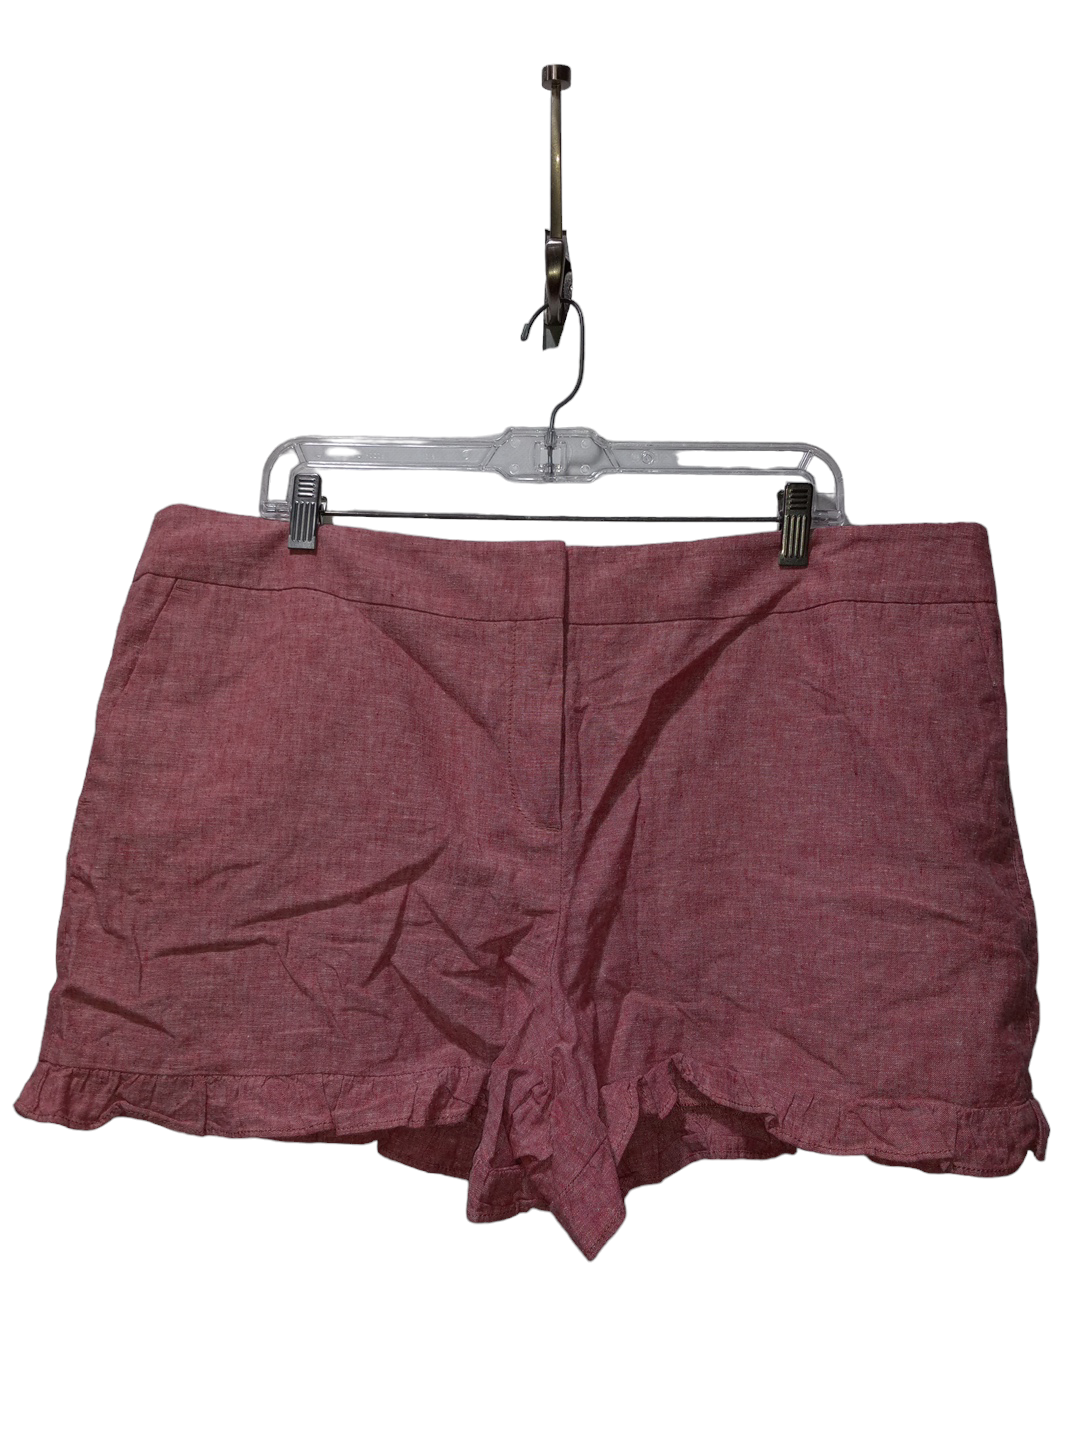 Red Shorts Loft, Size 4